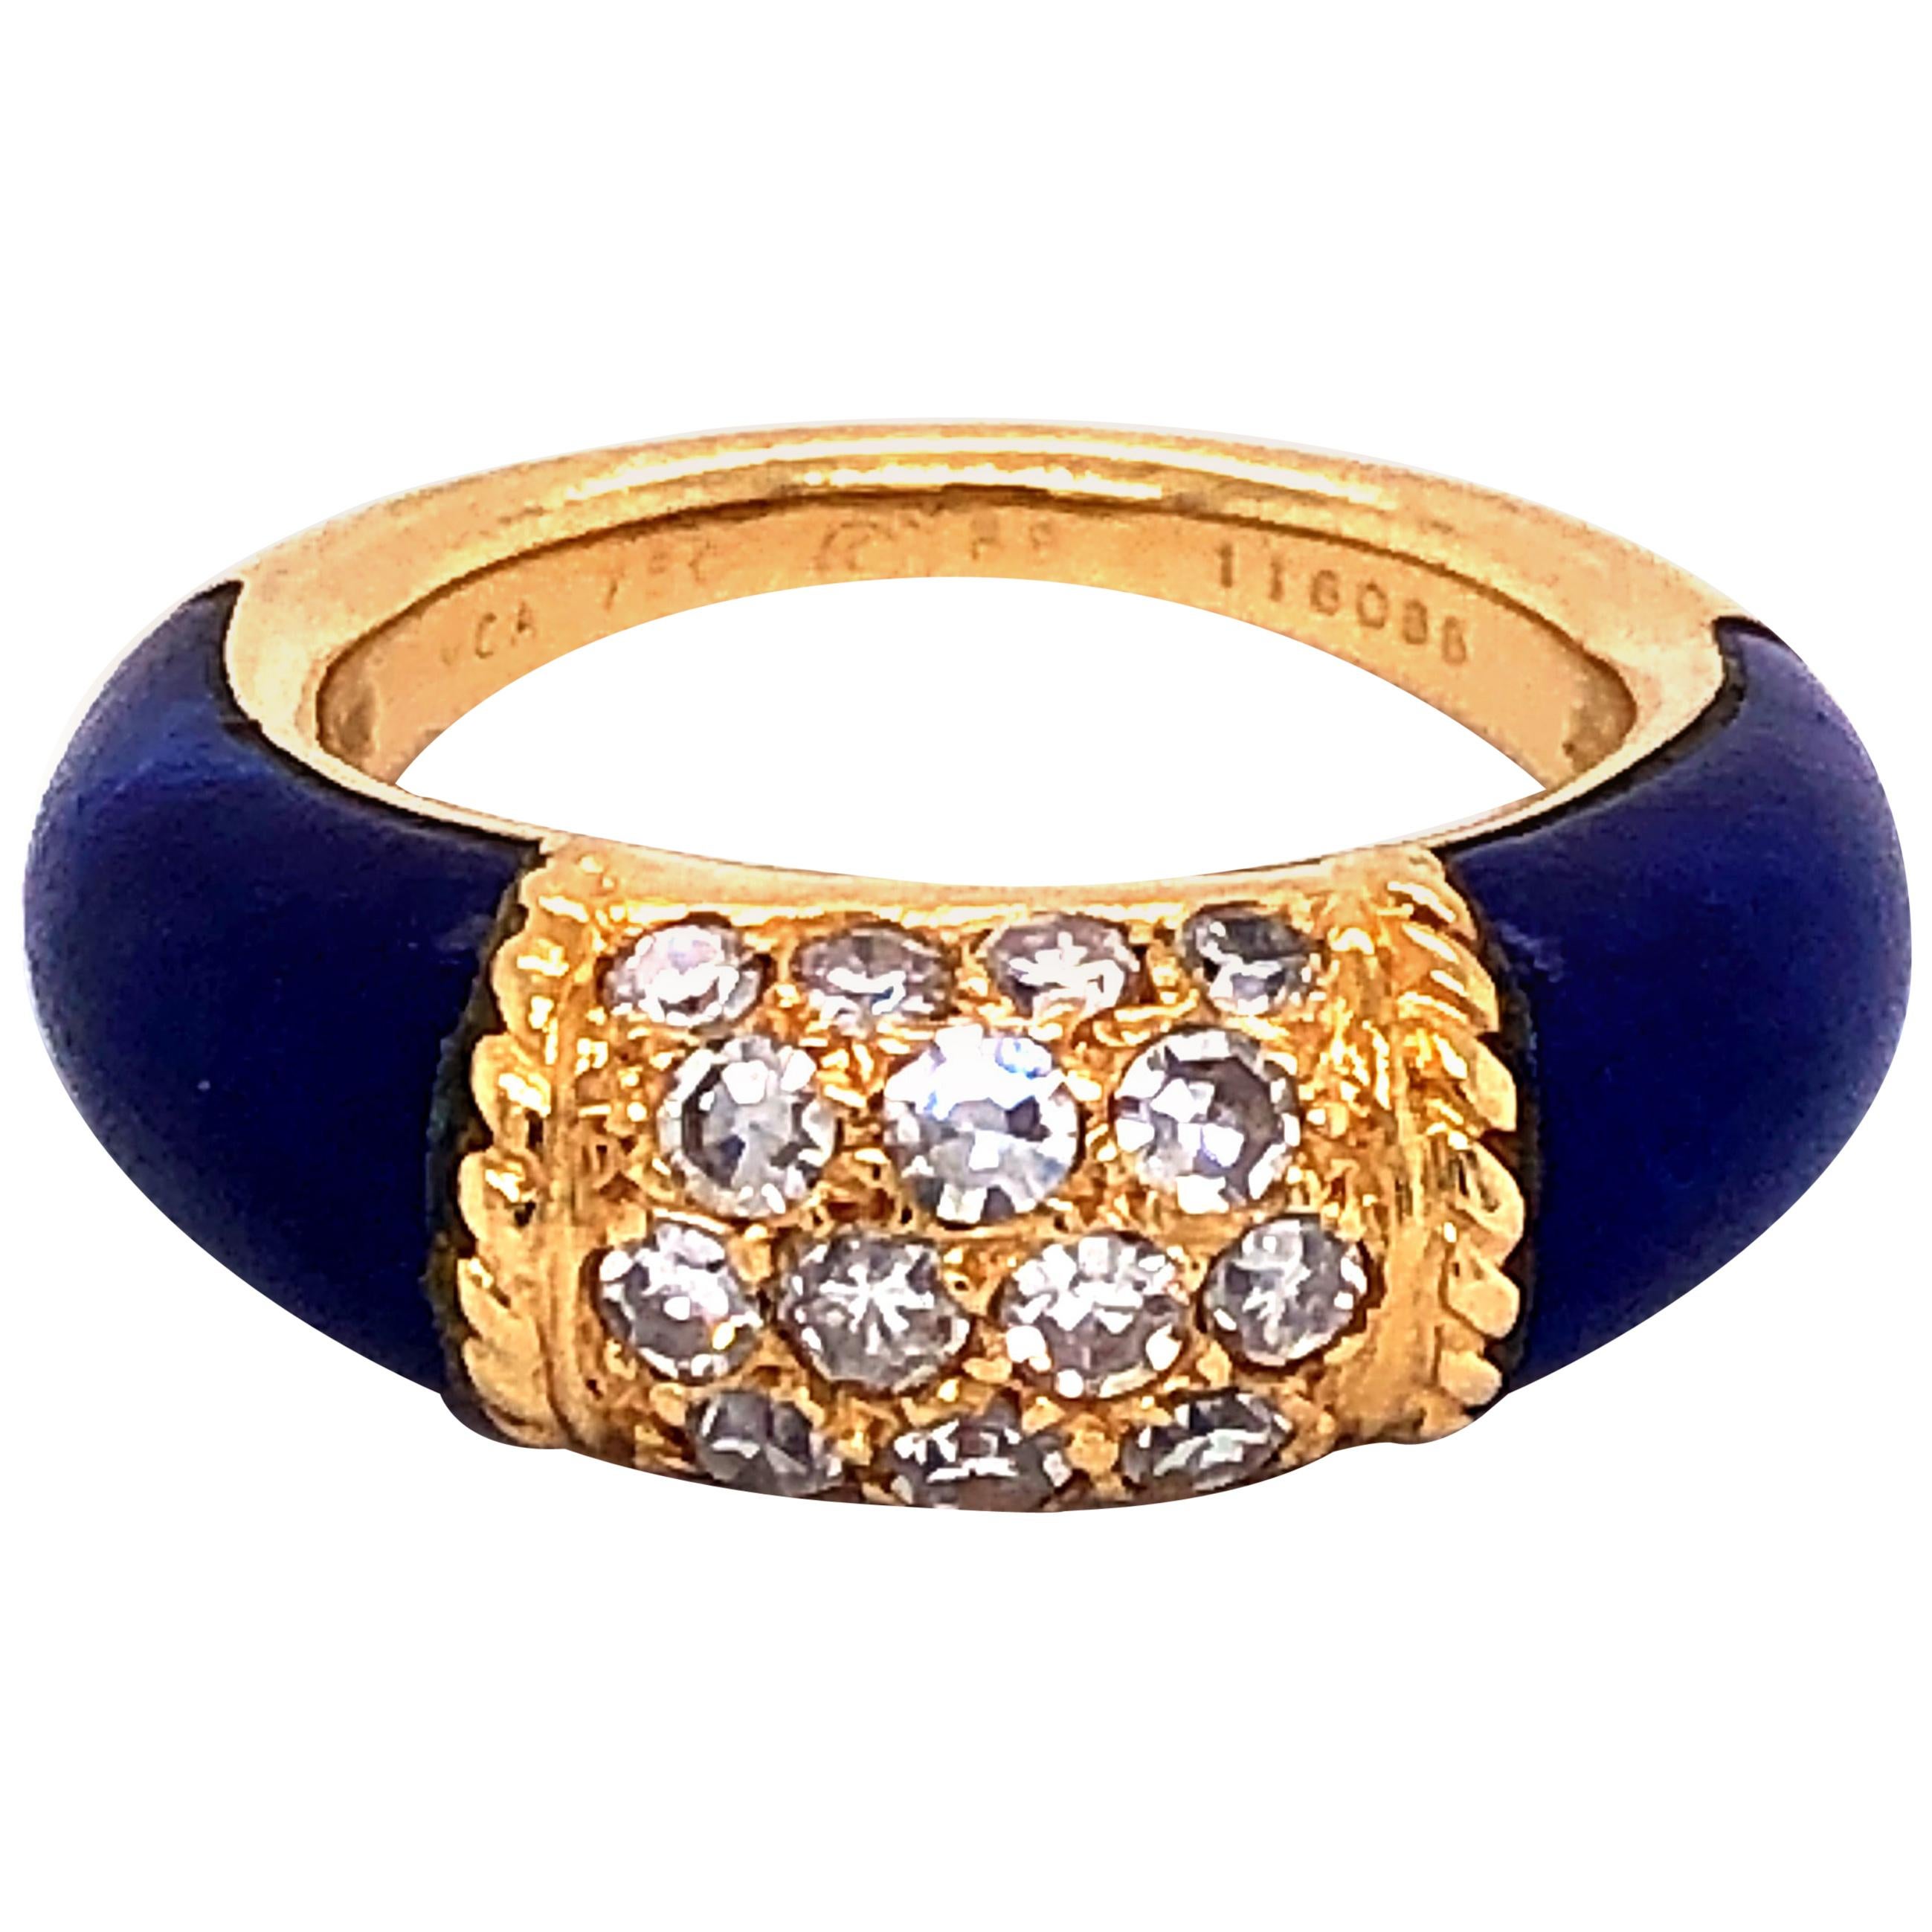 Van Cleef & Arpels Stacking Philippine Ring, Lapis Lazuli, Diamonds, Yellow Gold